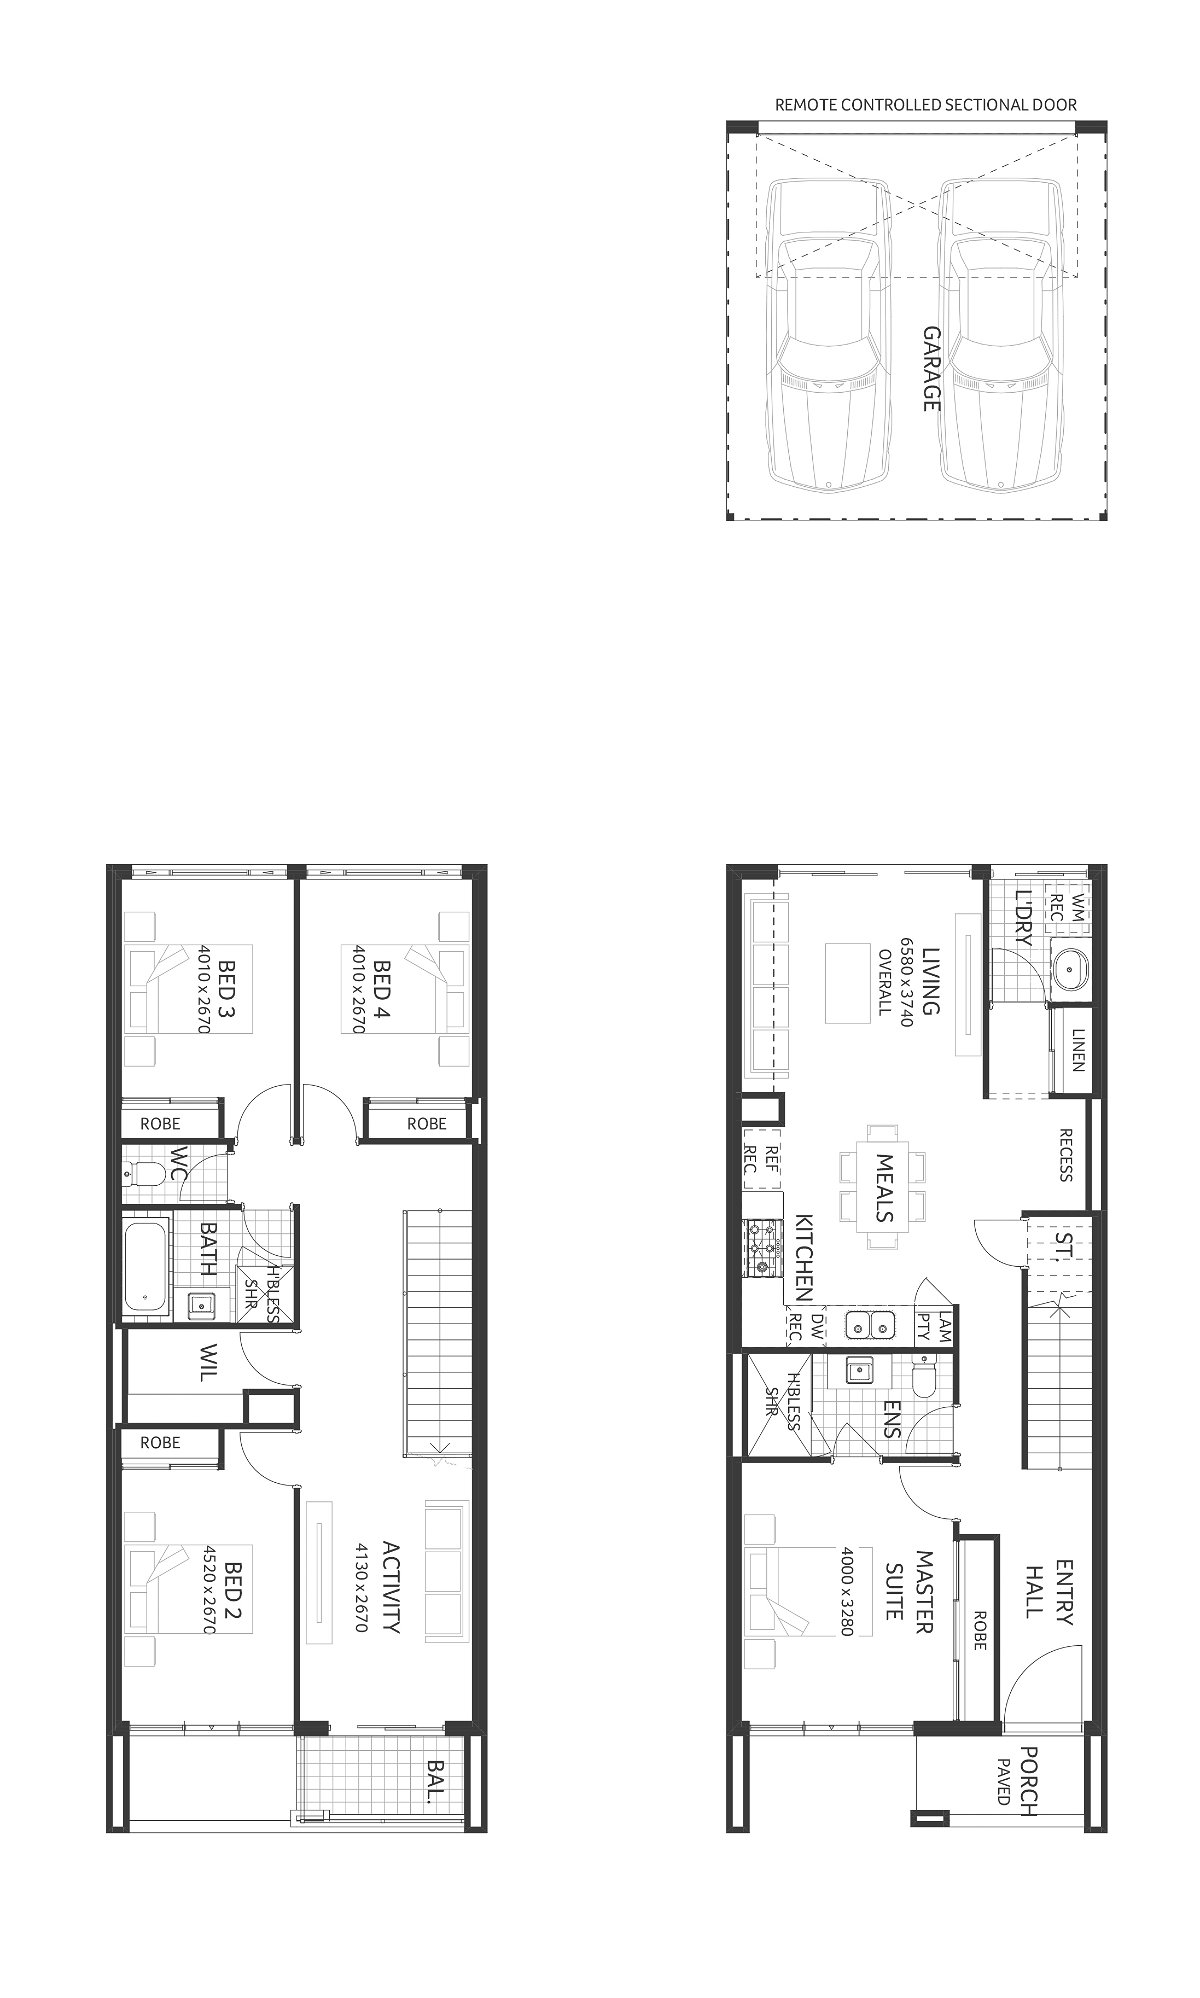 Plunkett Homes - Melrose | Mid-Century - Floorplan - Melrose Luxe Mid Century Website Floorplan